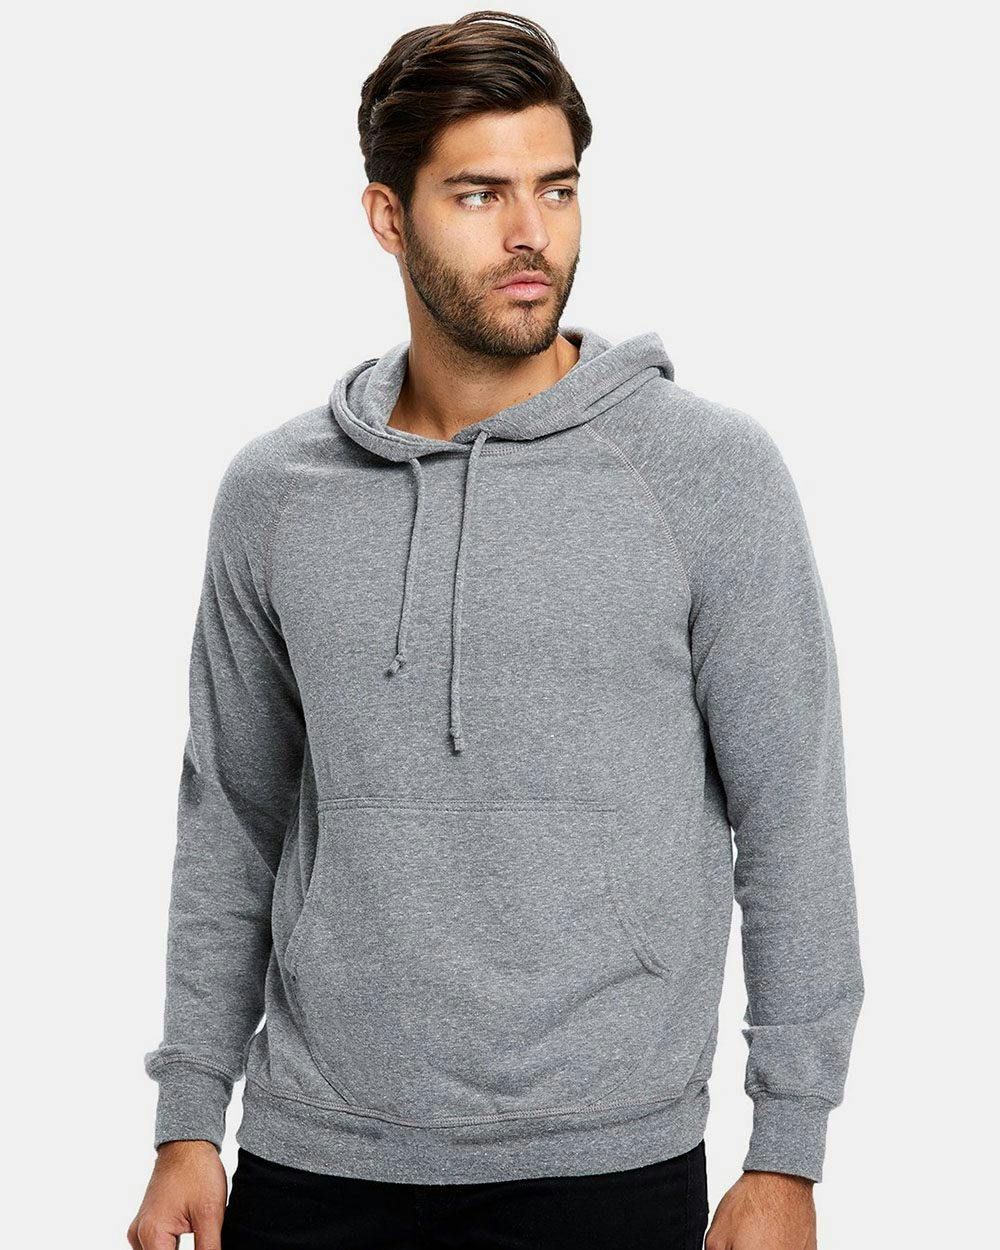 Image for Unisex Pullover Hooded Sweatshirt - US8899